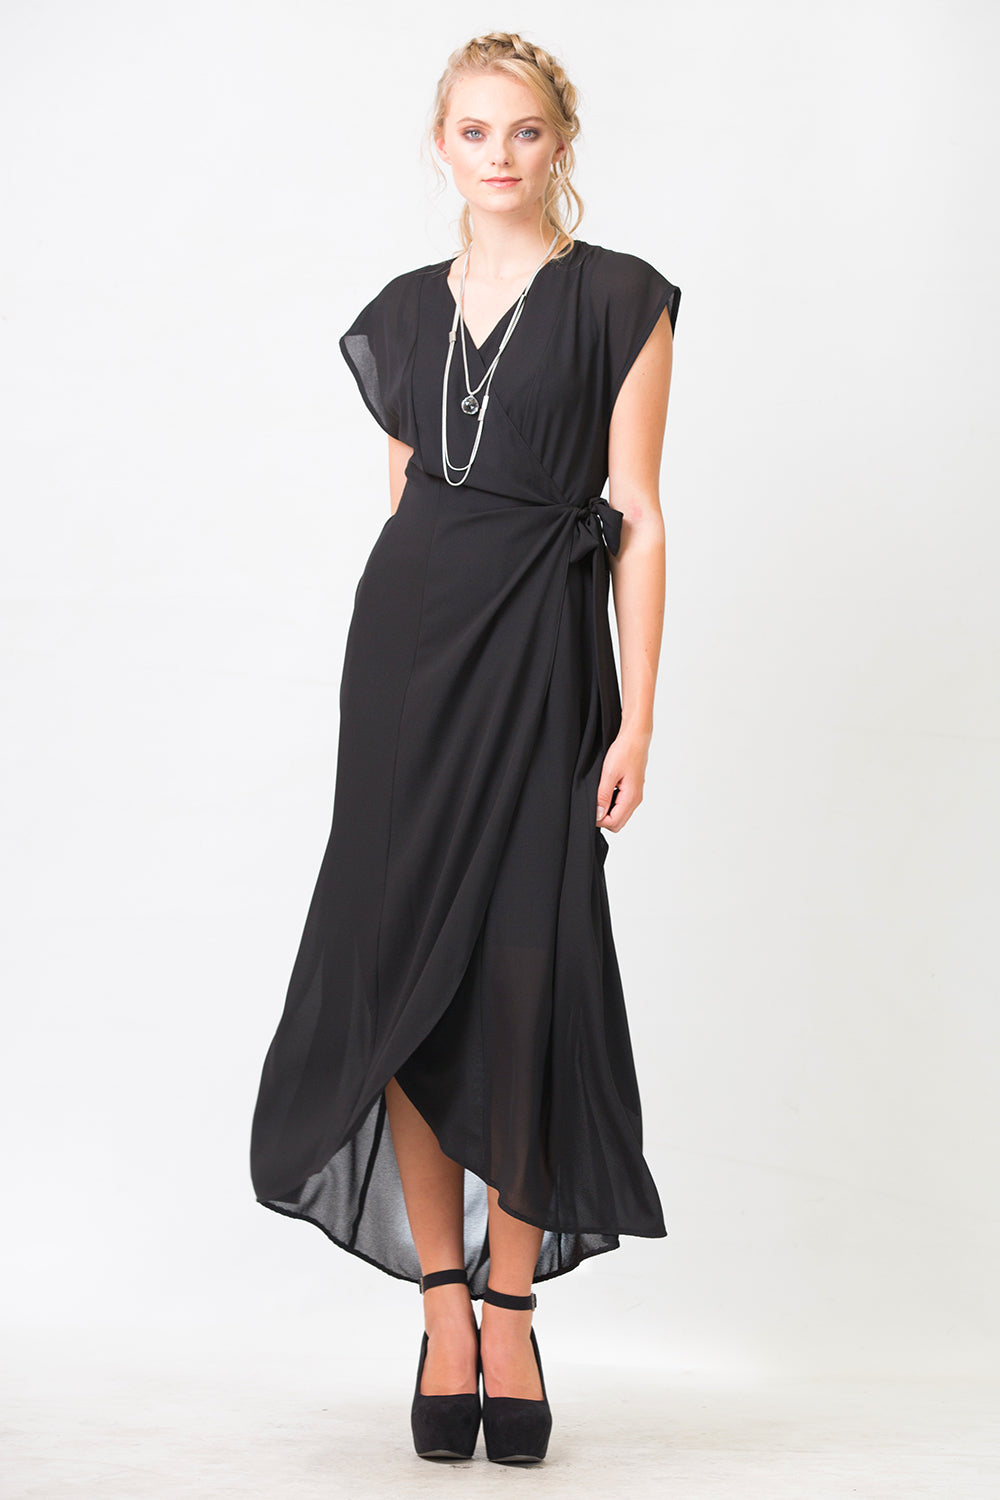 Gretchen 2 Dress Black | Long Sheer Wrap Dresses | Occasion Dresses in NZ